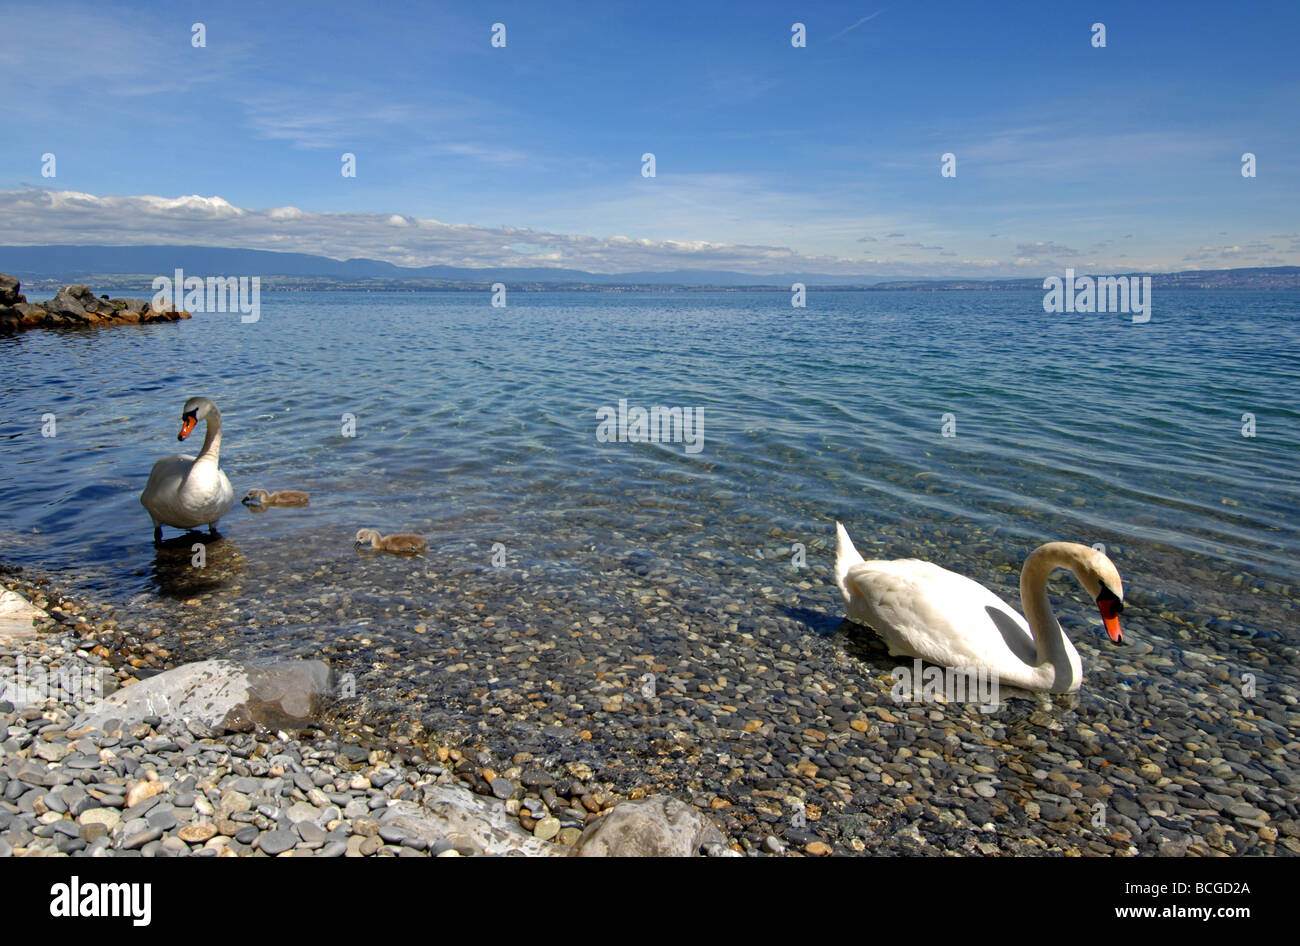 Swan and cygnets on 'Lake Geneva', Evian, France Stock Photo